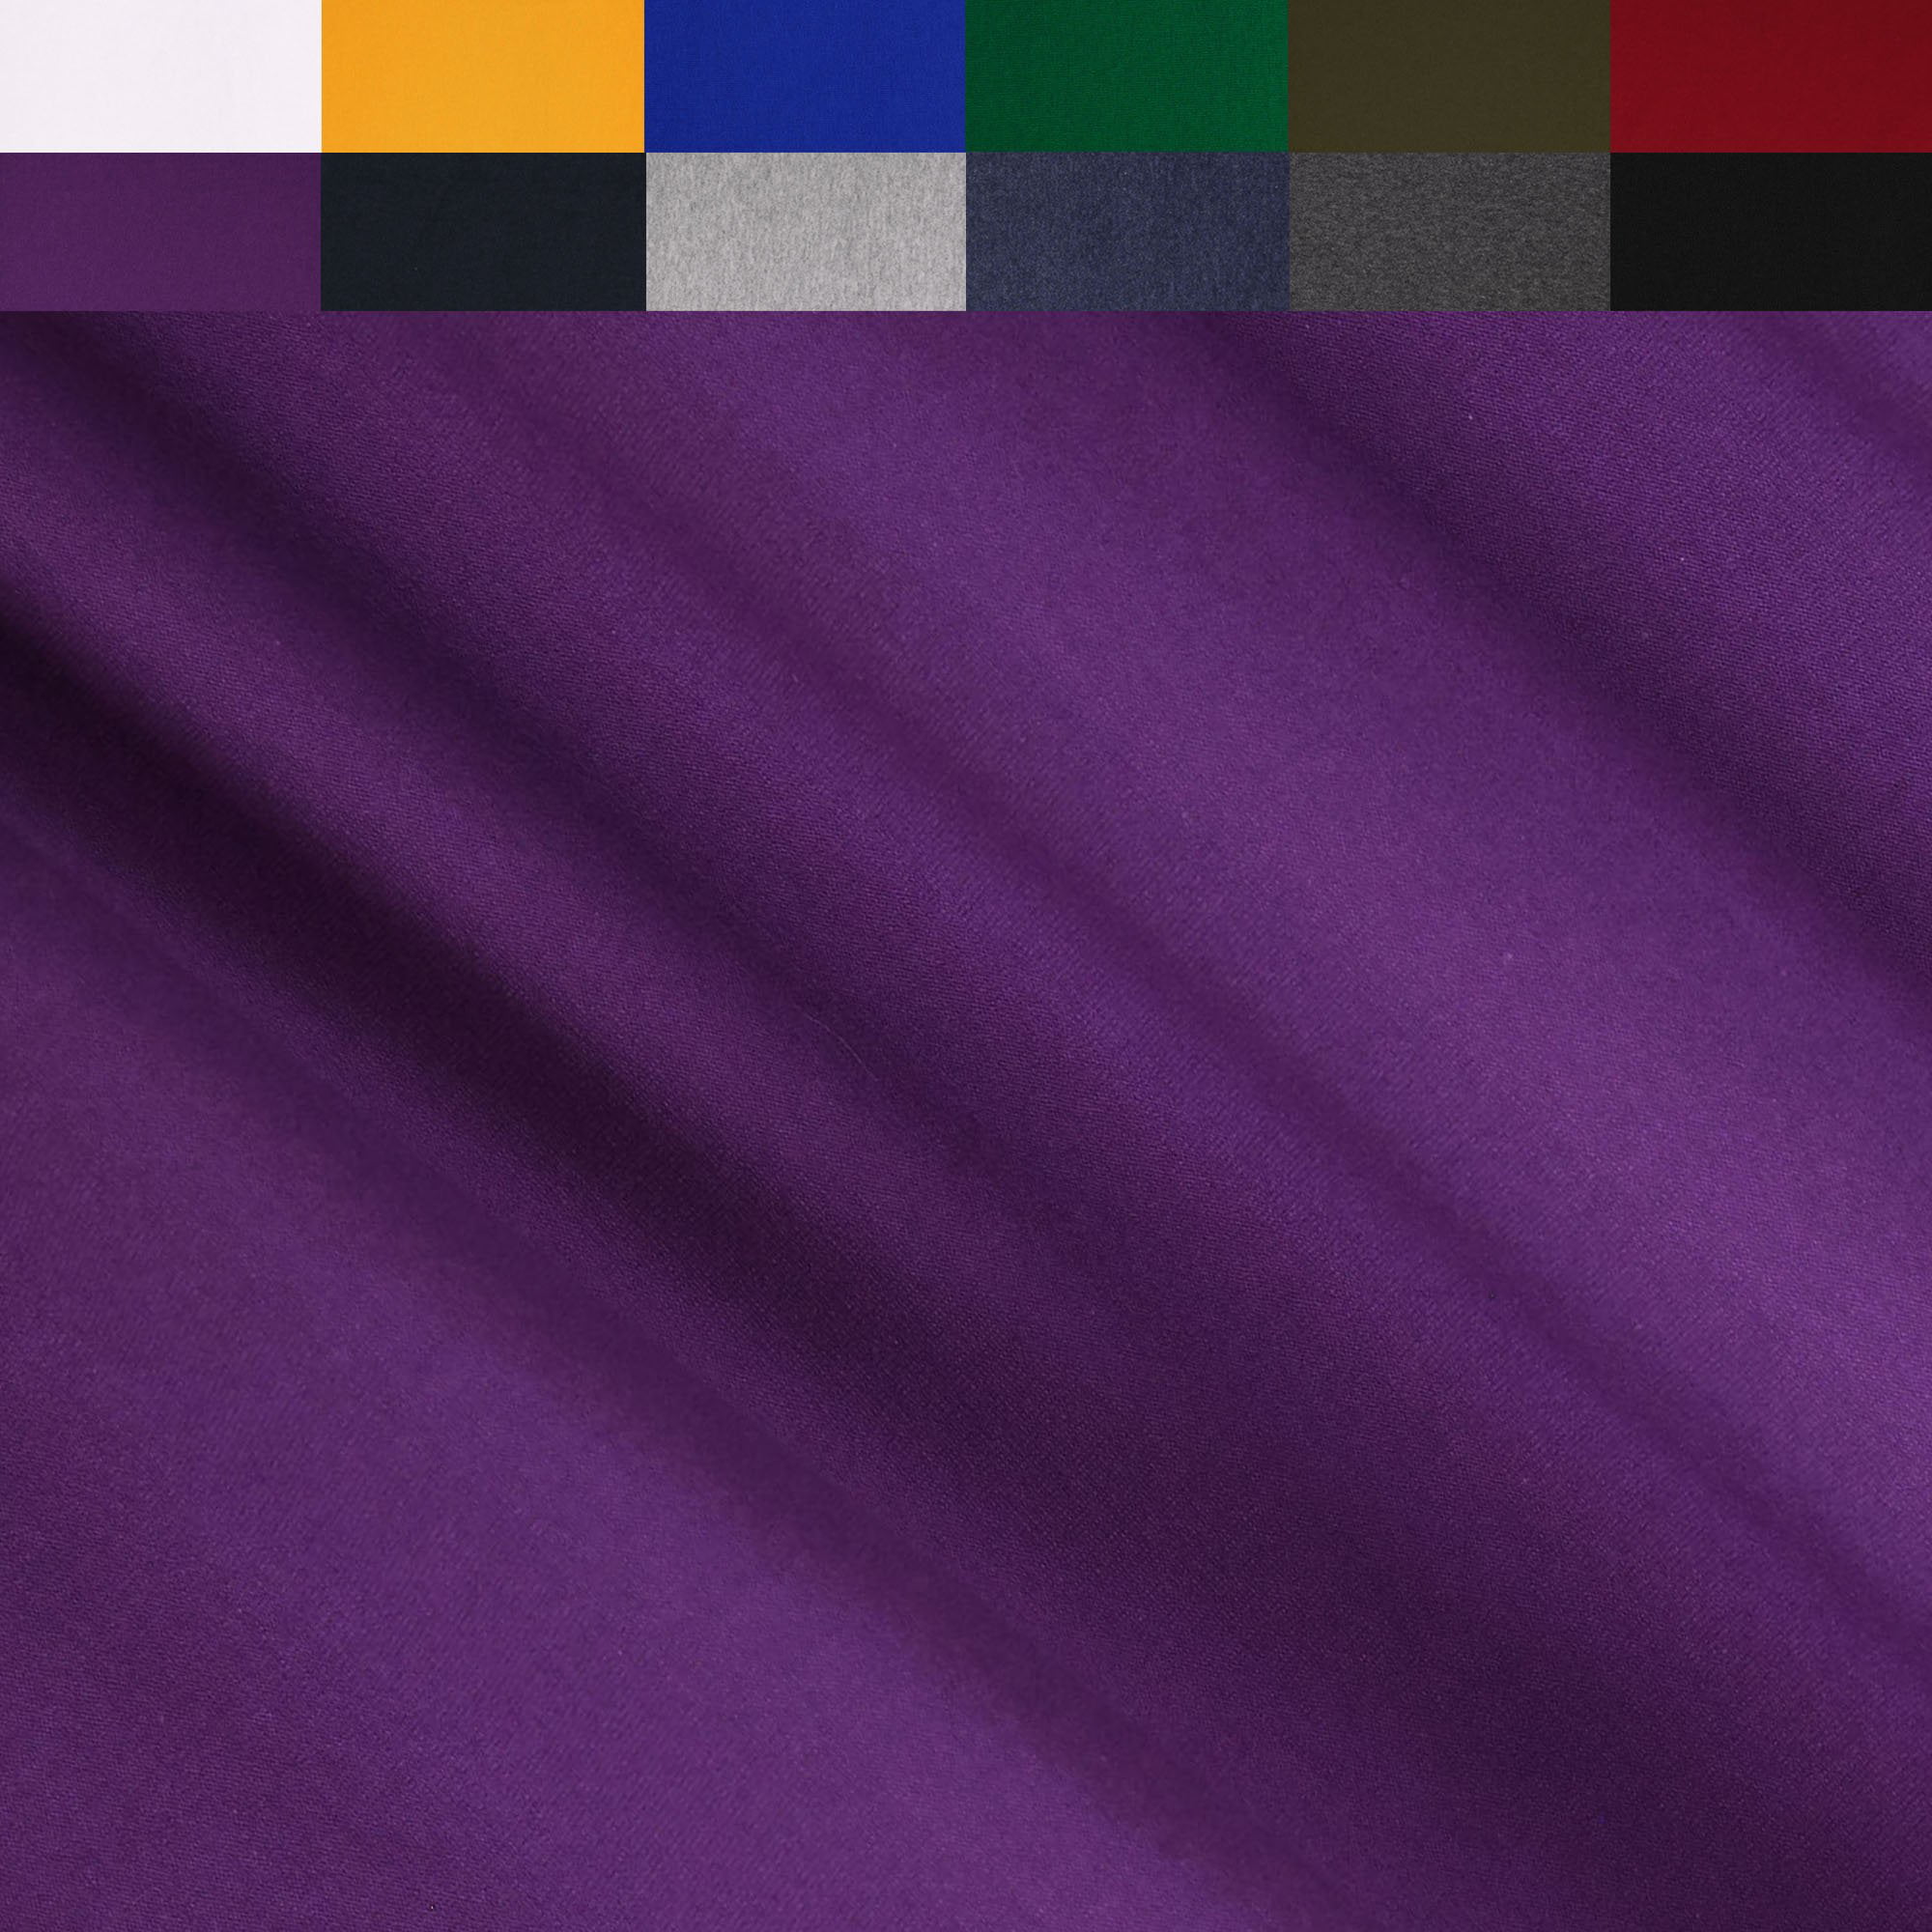 220GR - 2 Yards FabricLA Turkish Cotton Jersey Spandex Blend 4 Way Stretch Purple 